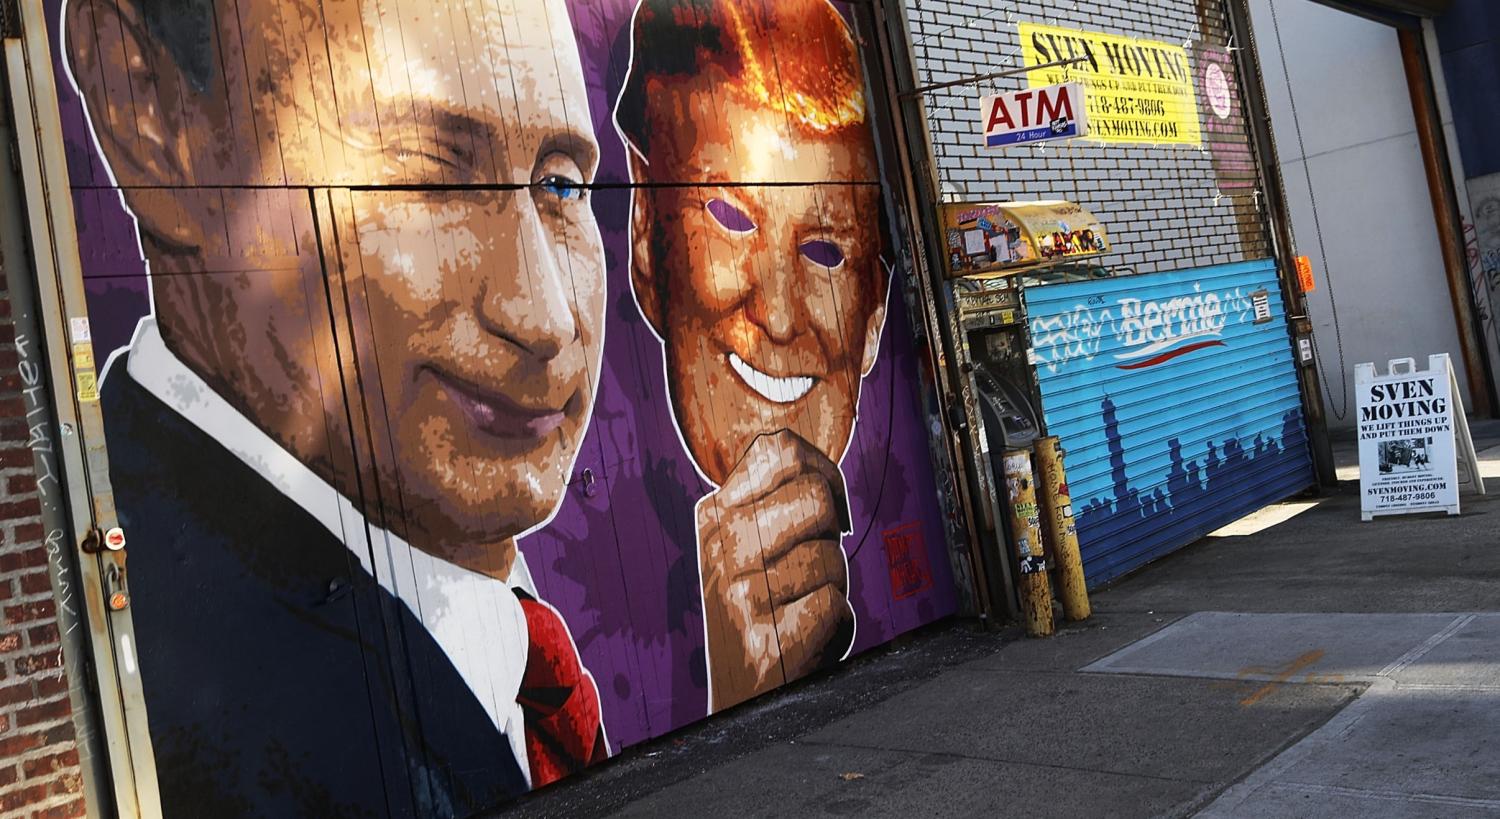 A mural depicting Vladimir Putin taking off a Donald Trump mask, New York, 2017 (Photo: Getty Images/Spencer Platt)